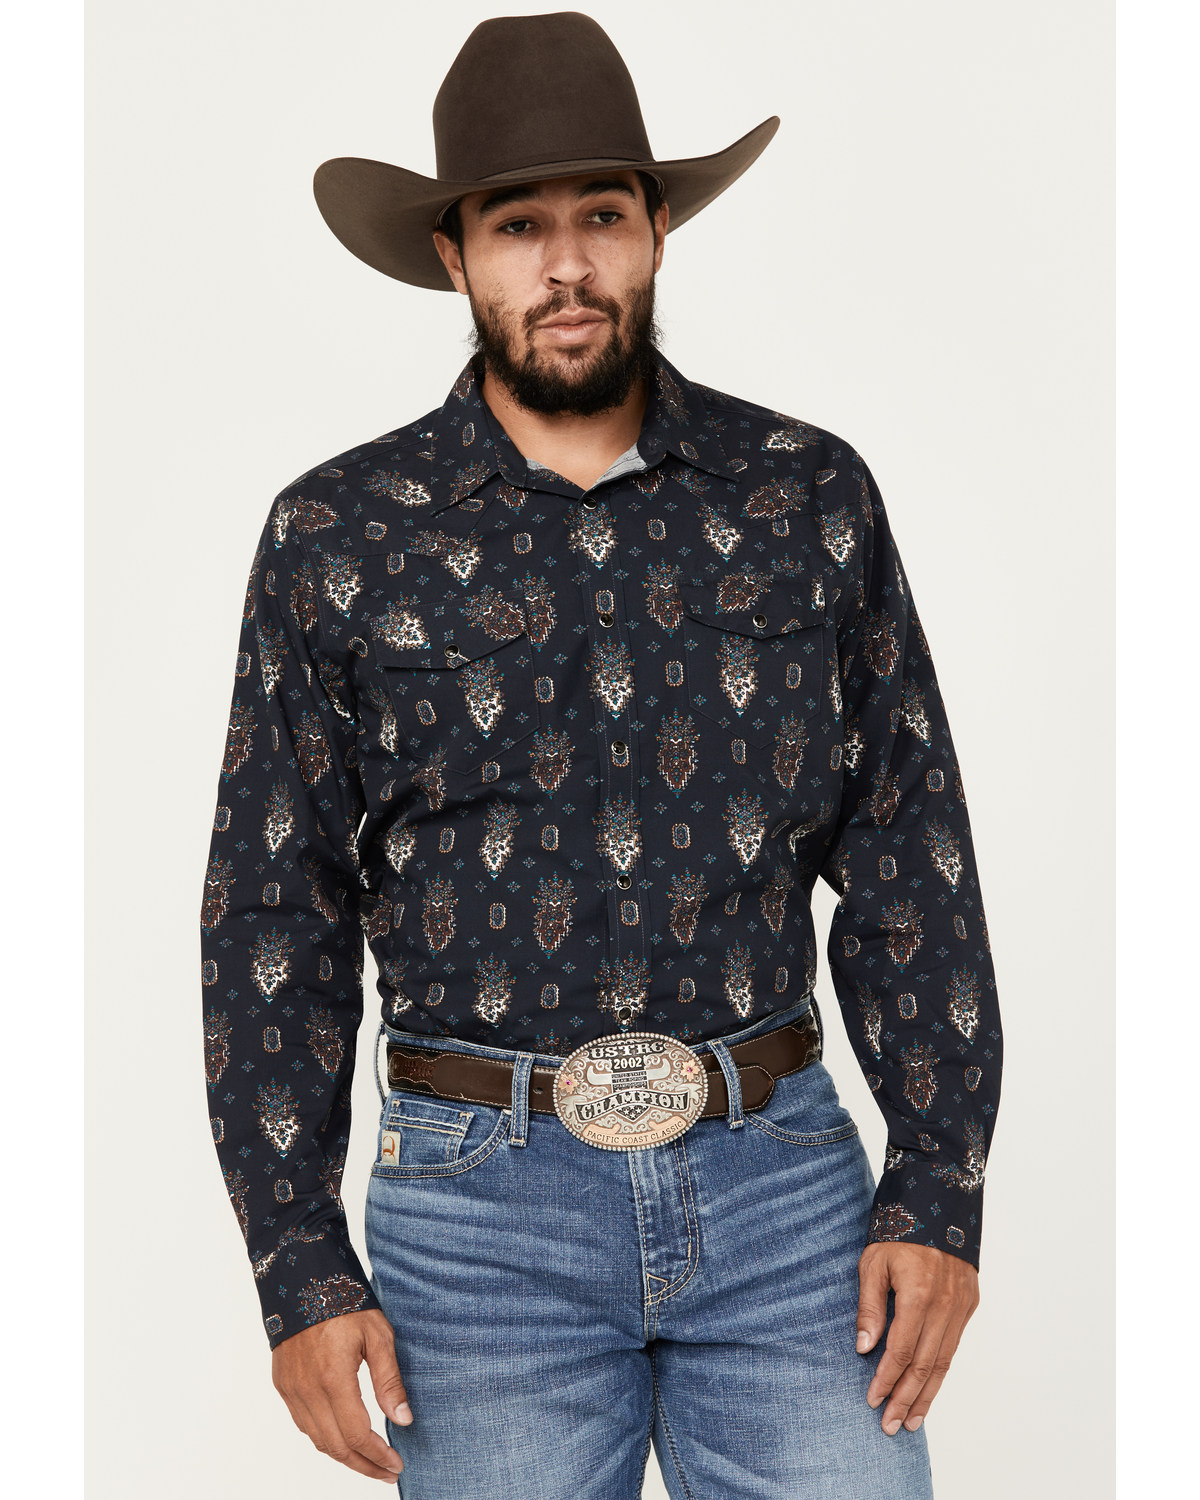 Gibson Trading Co Men's Mardi Gras Print Long Sleeve Snap Western Shirt